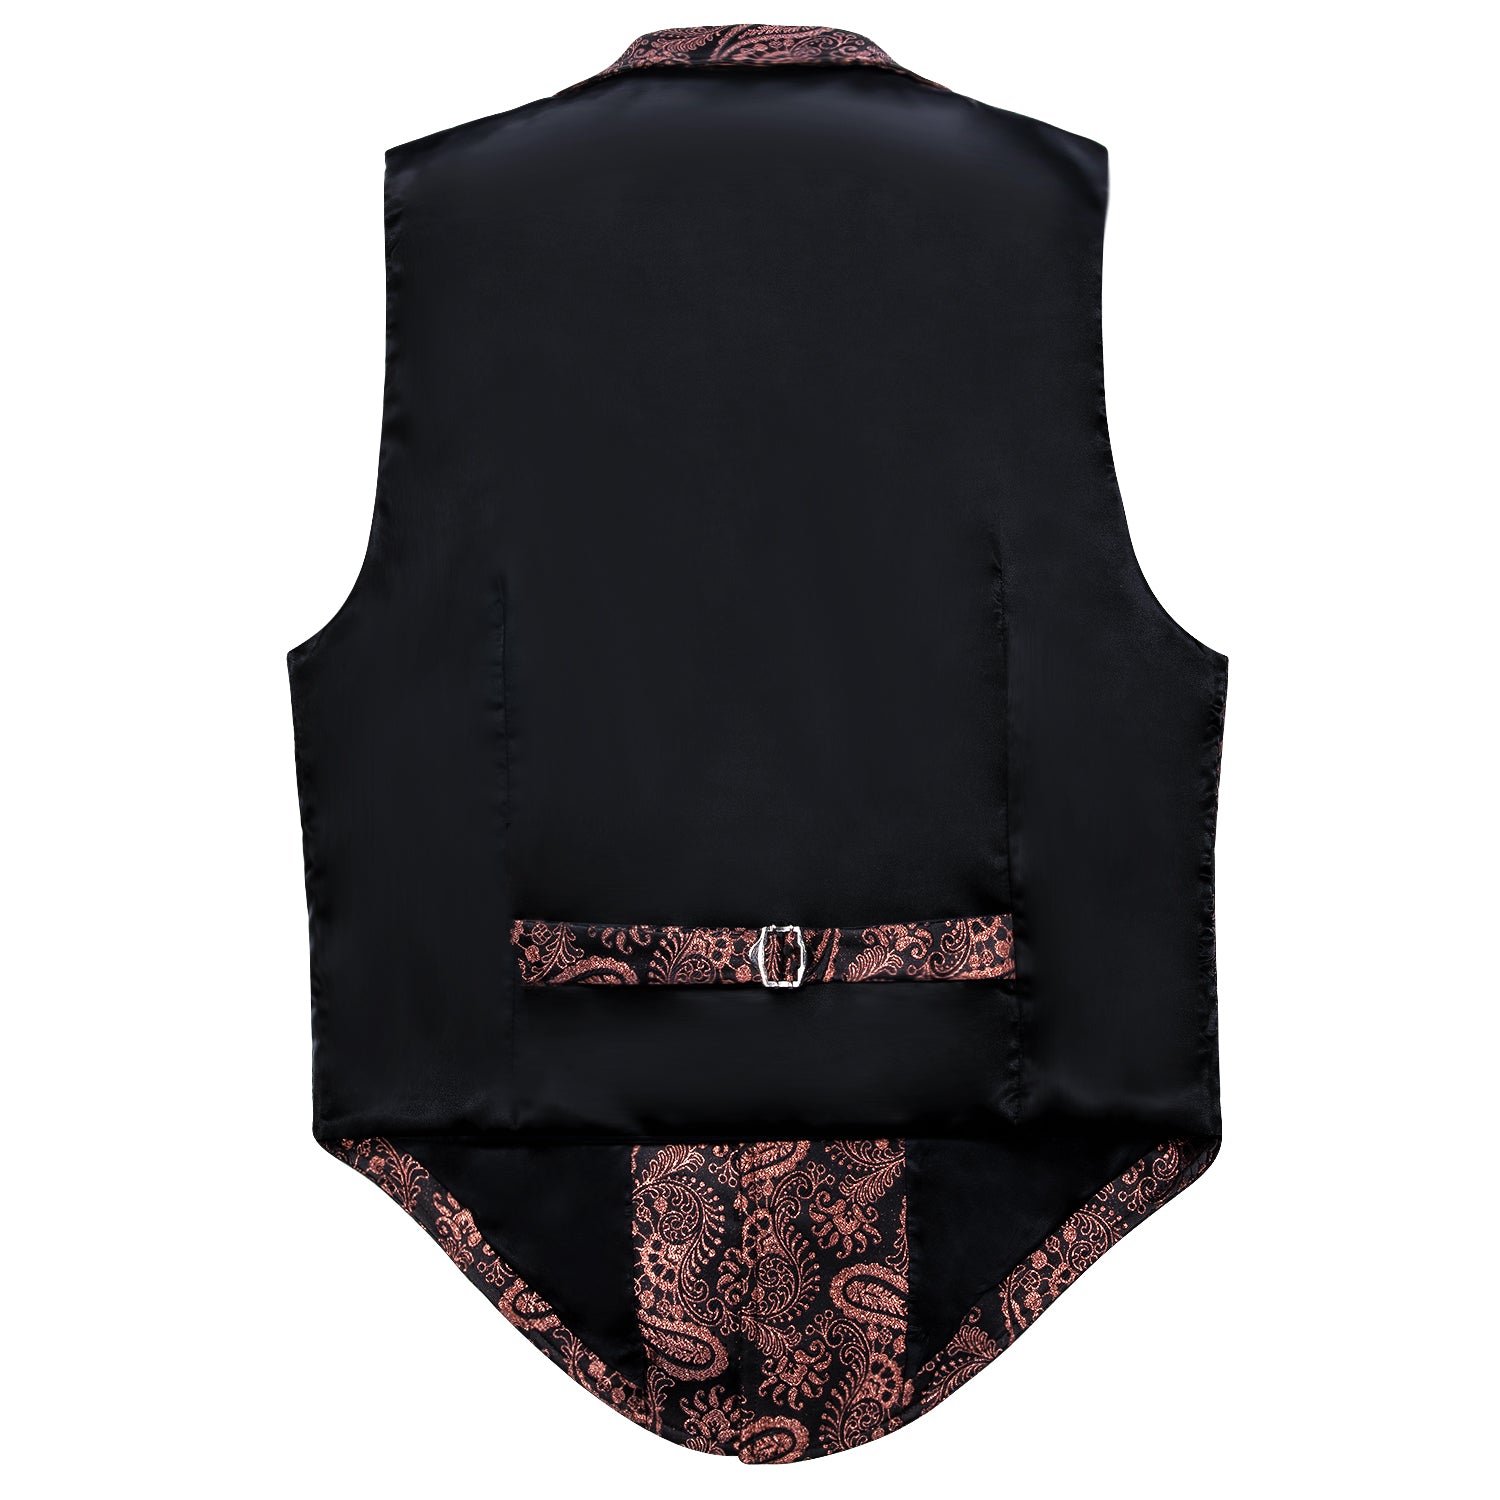 Luxury Men's Novelty Brown Black Paisley Silk Vest